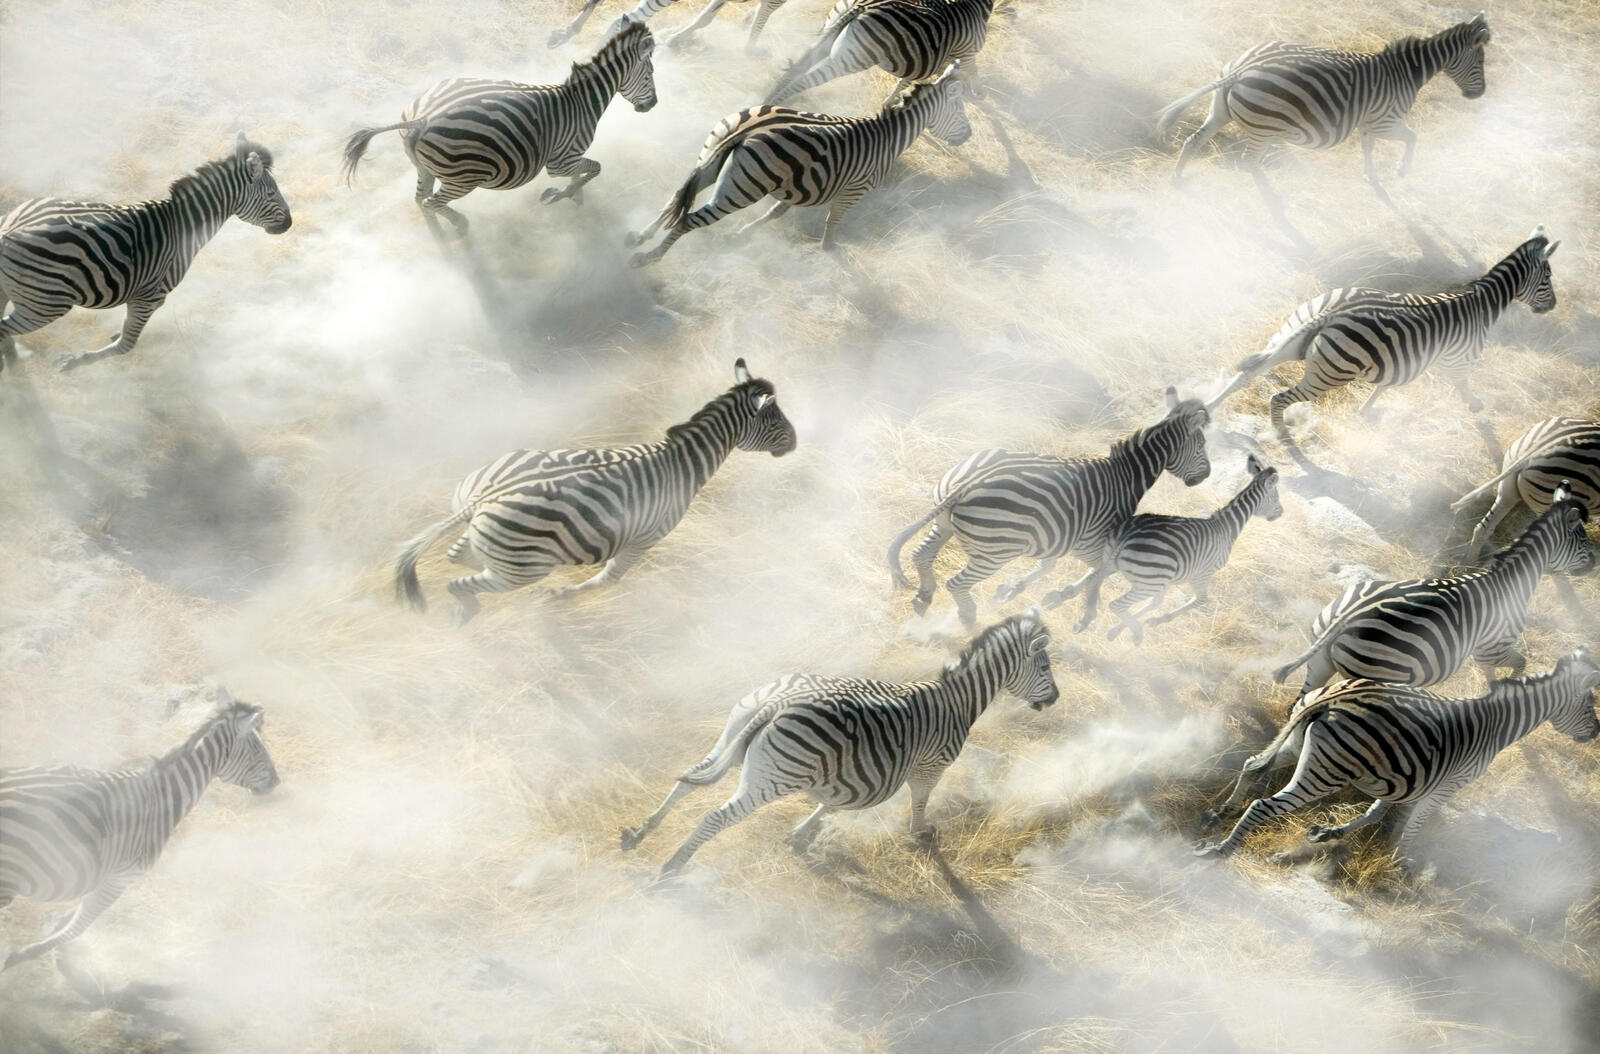 Zebras on the Move | Magazine Articles | WWF